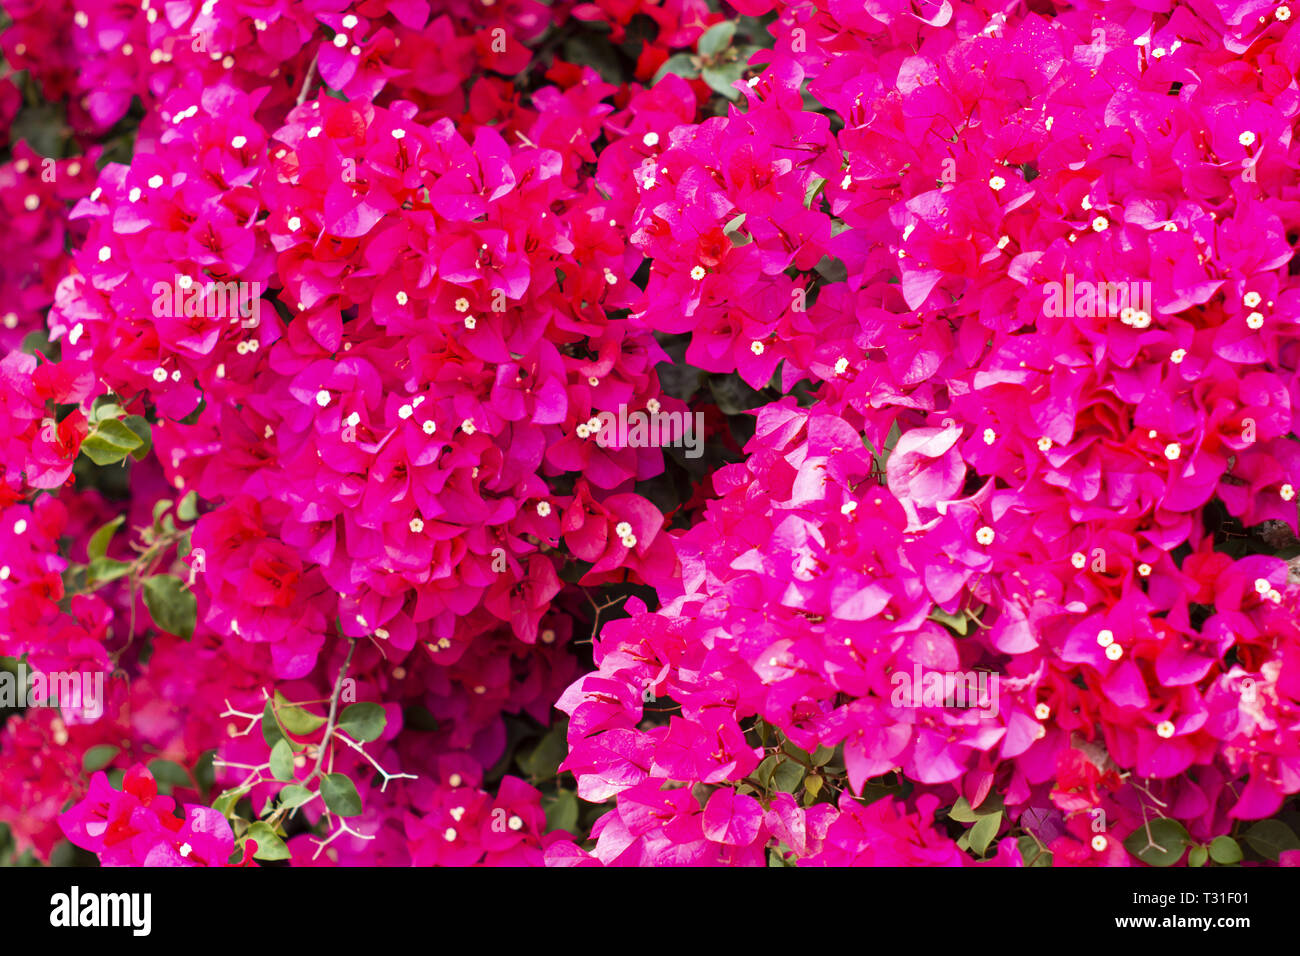 close up image of magenta flowers Stock Photo - Alamy